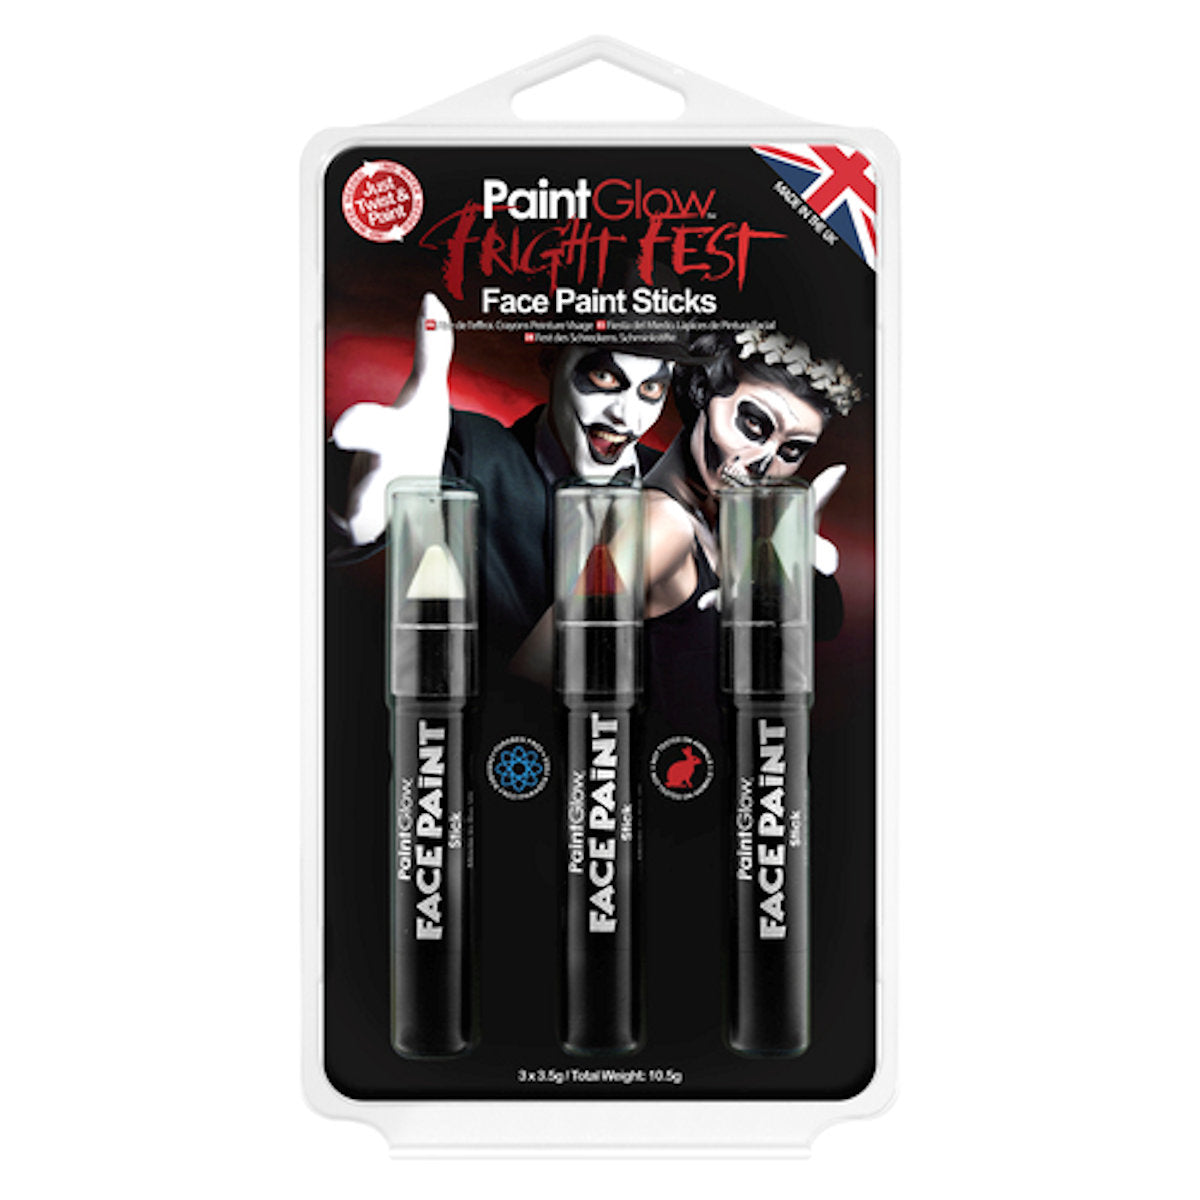 Fright Fest Face Paint Sticks Set of 3 Halloween Make Up Paint Glow